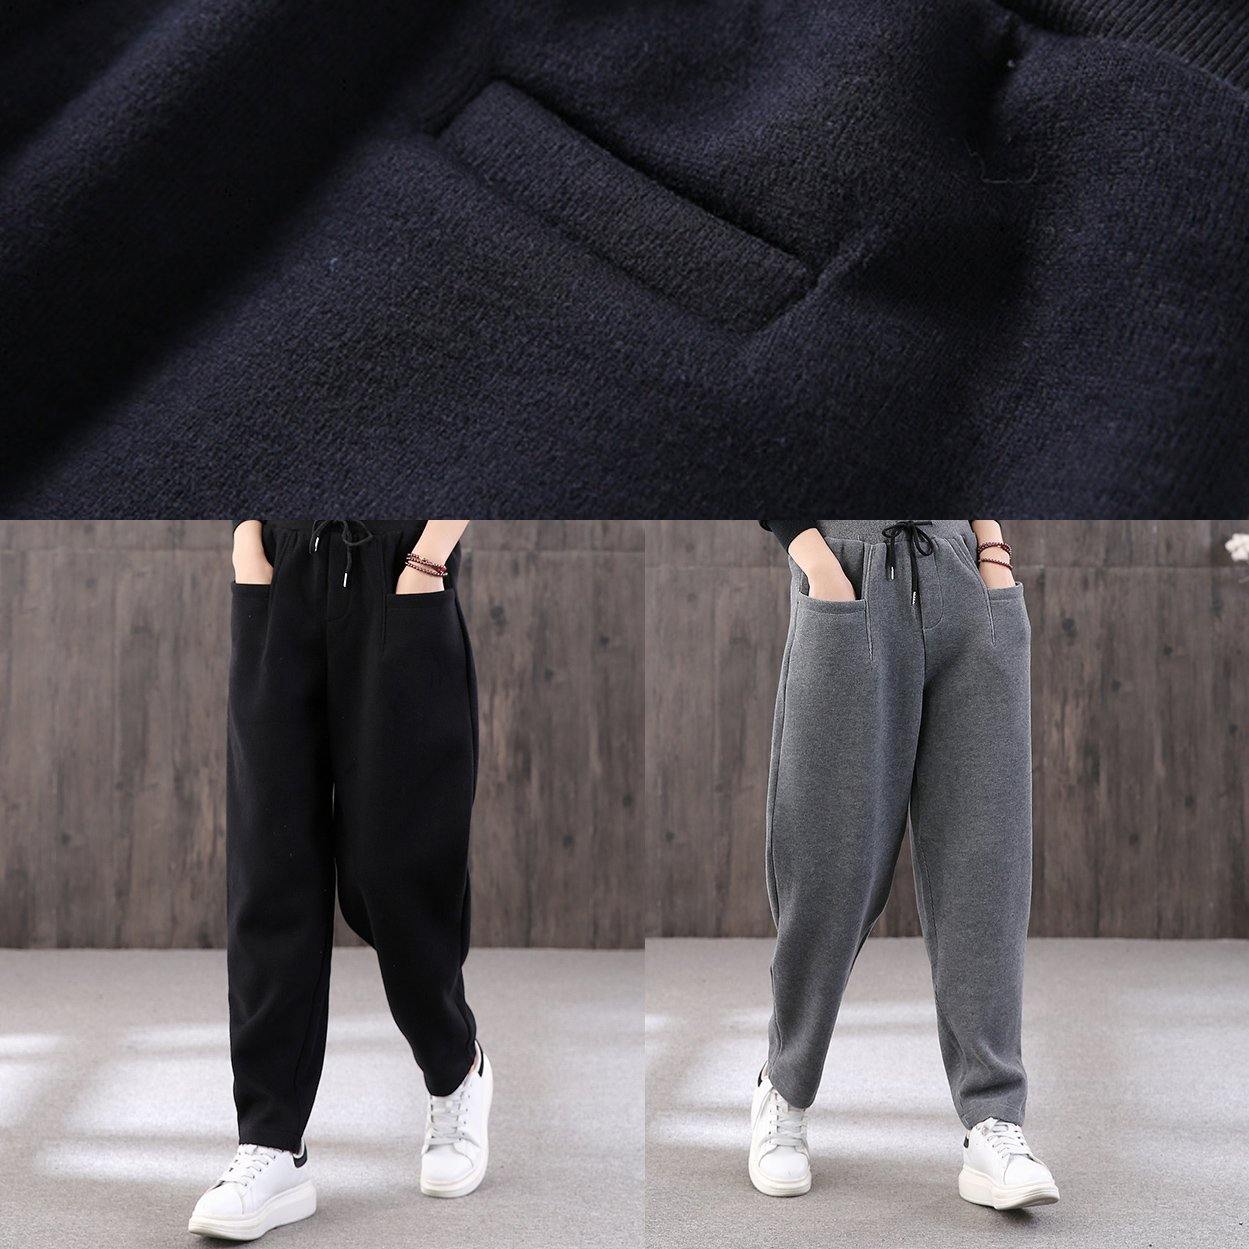 Organic black pants stylish drawstring elastic waist Outfits women trousers - Omychic